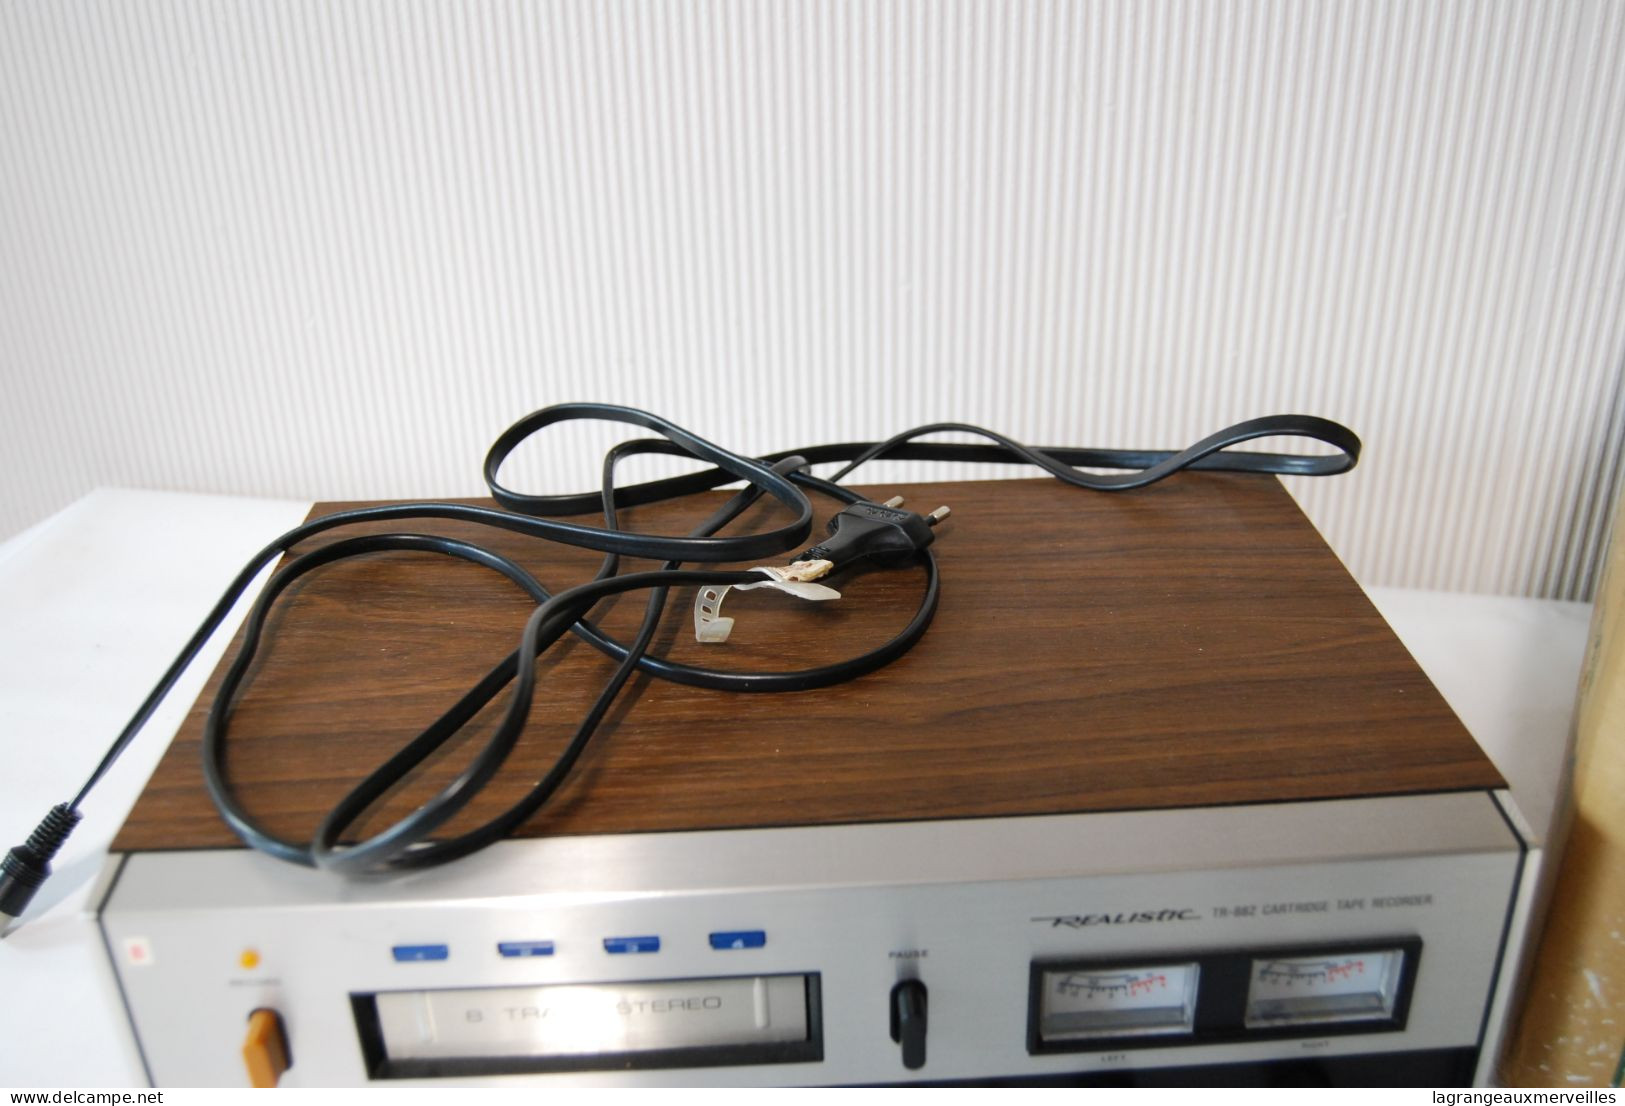 E2 Ancien Appareil Realistic Vintage TR 882 Cartridge Tape Recorder - Musical Instruments